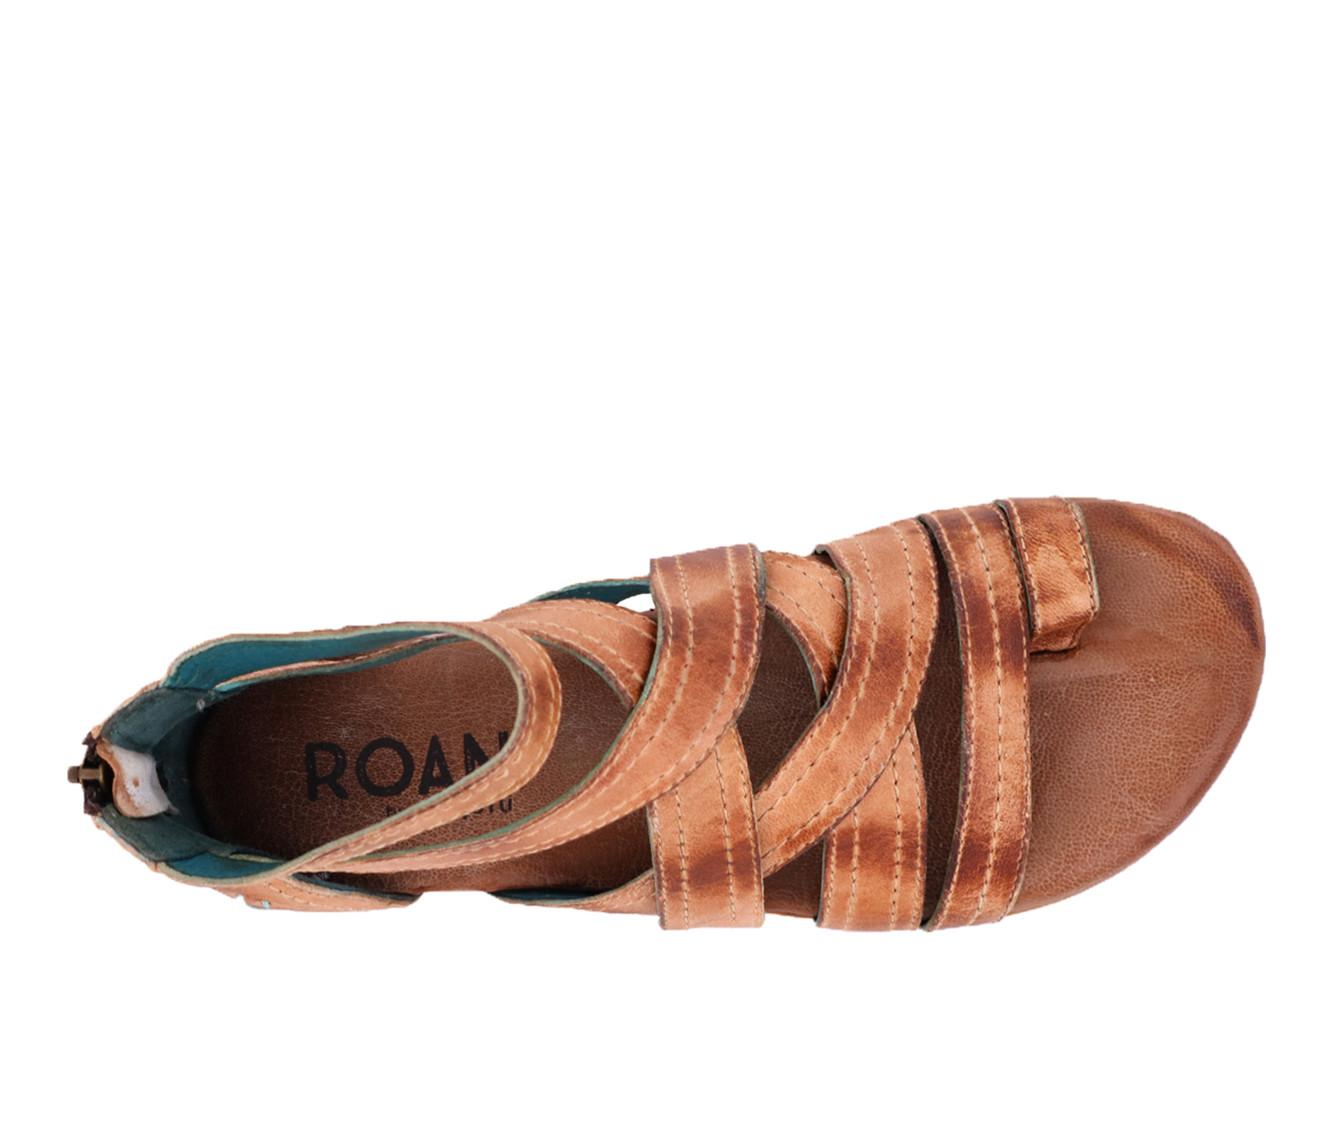 Women's ROAN by BED STU Royalty Sandals